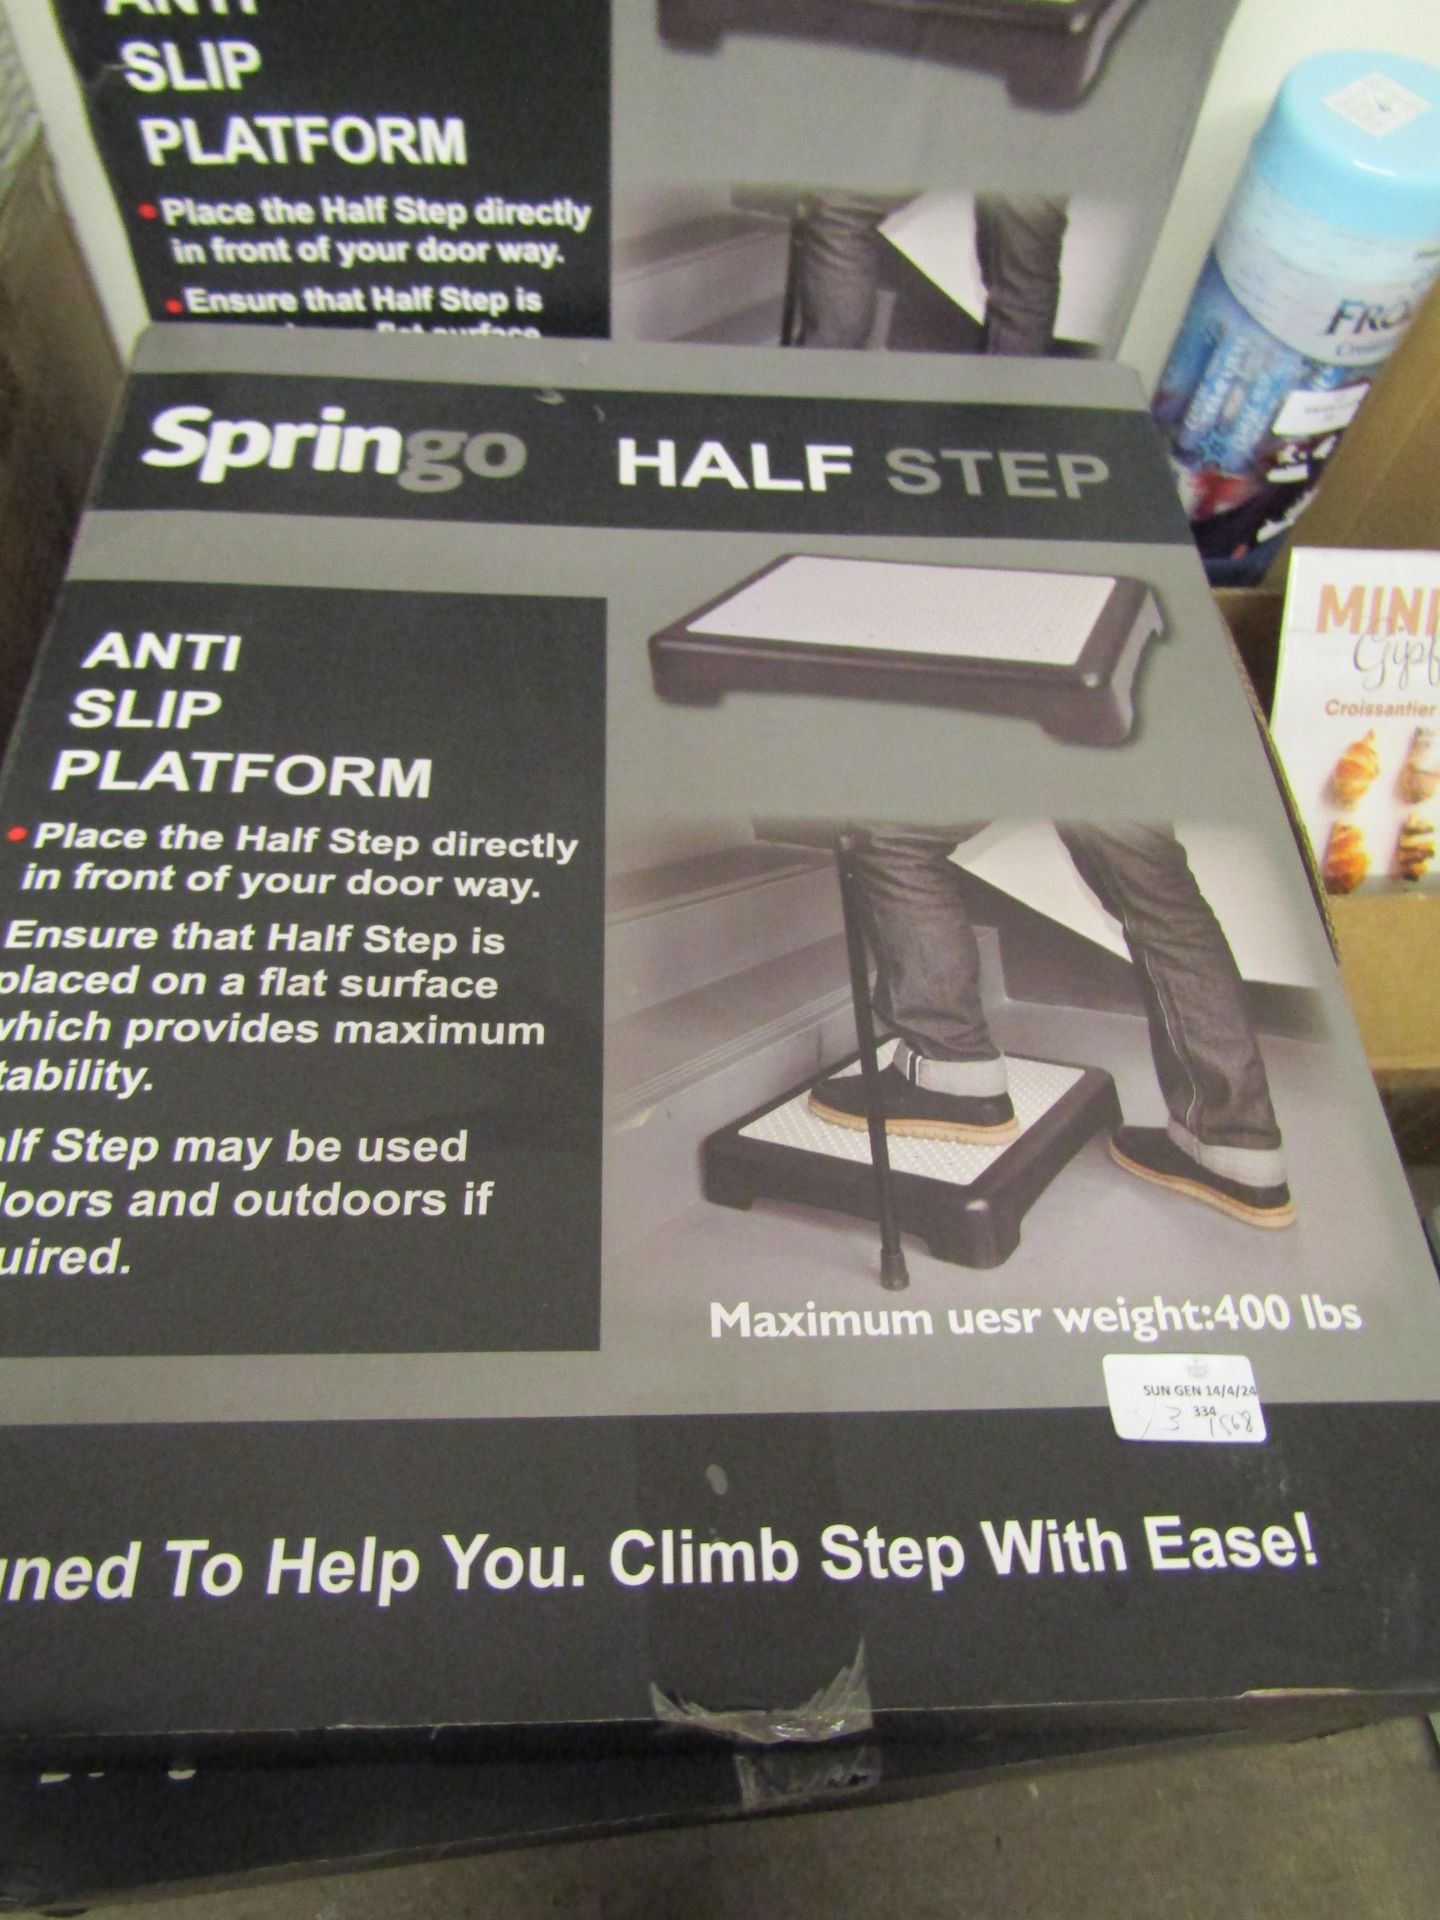 3x Springo Half Step, Anti Slip Platform, Unchecked & Boxed.